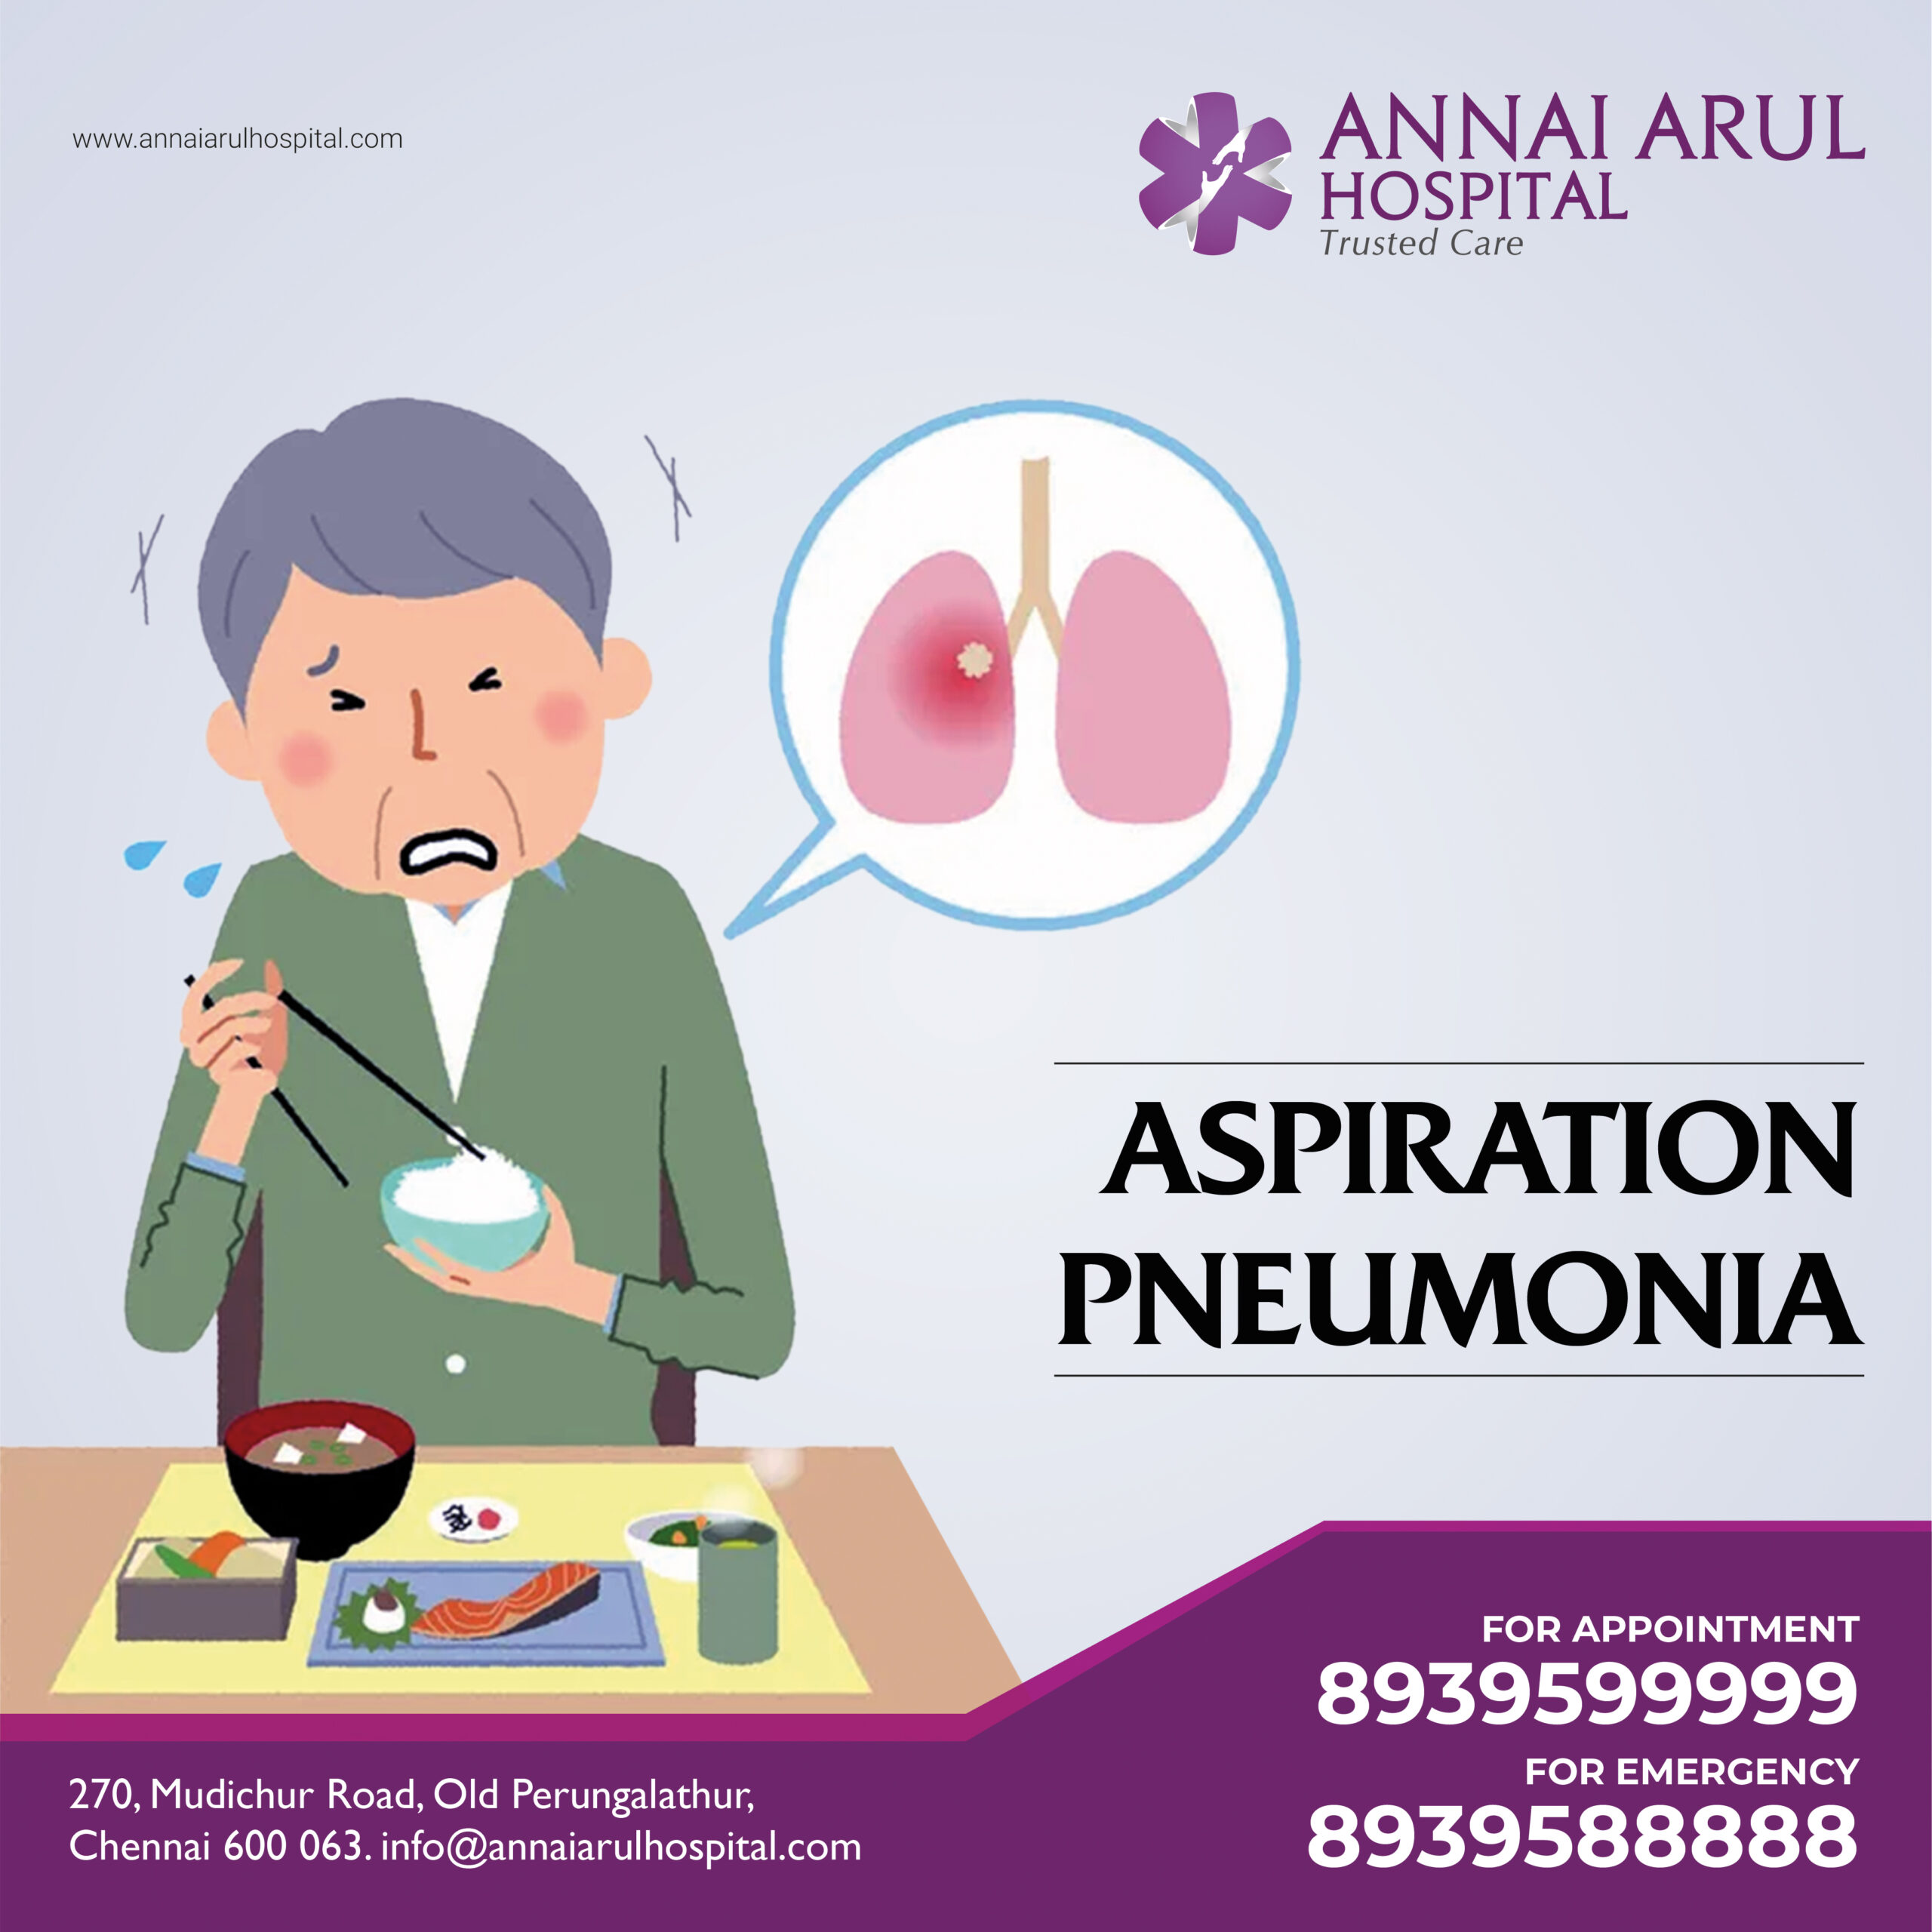 aspiration pneumonia lung sounds